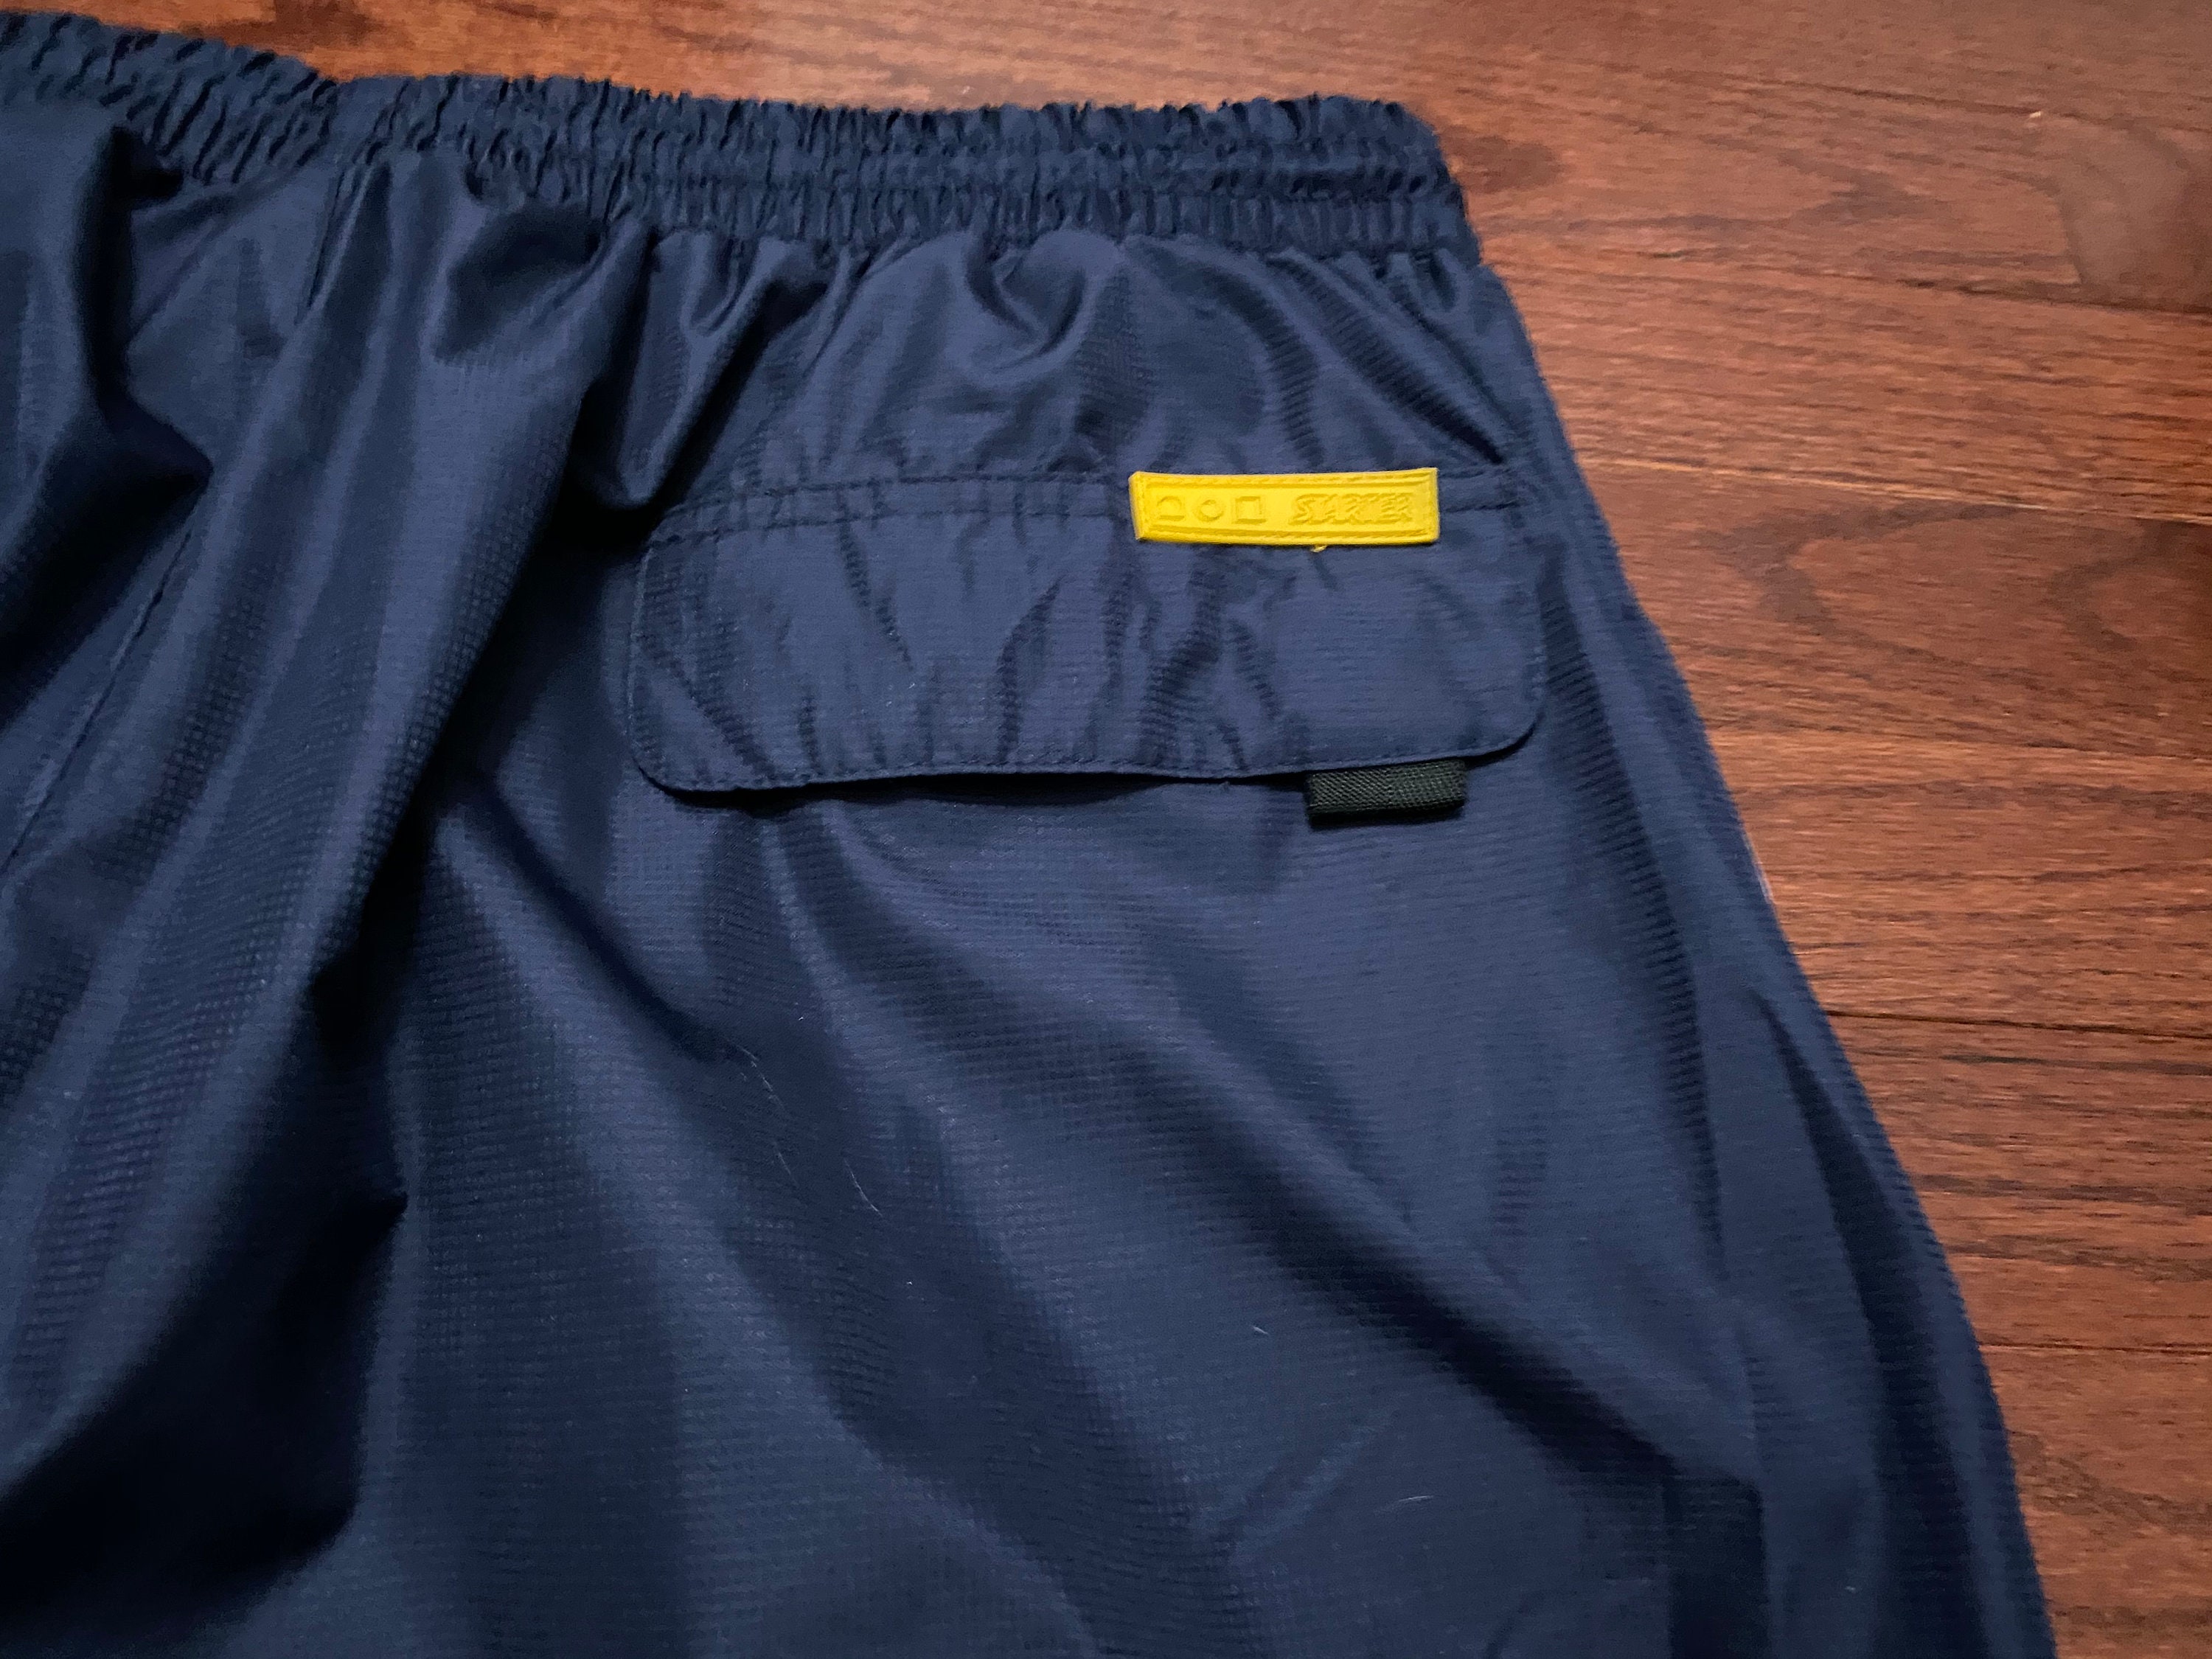 XL 90's Starter track pants swishy pants vintage navy blue | Etsy